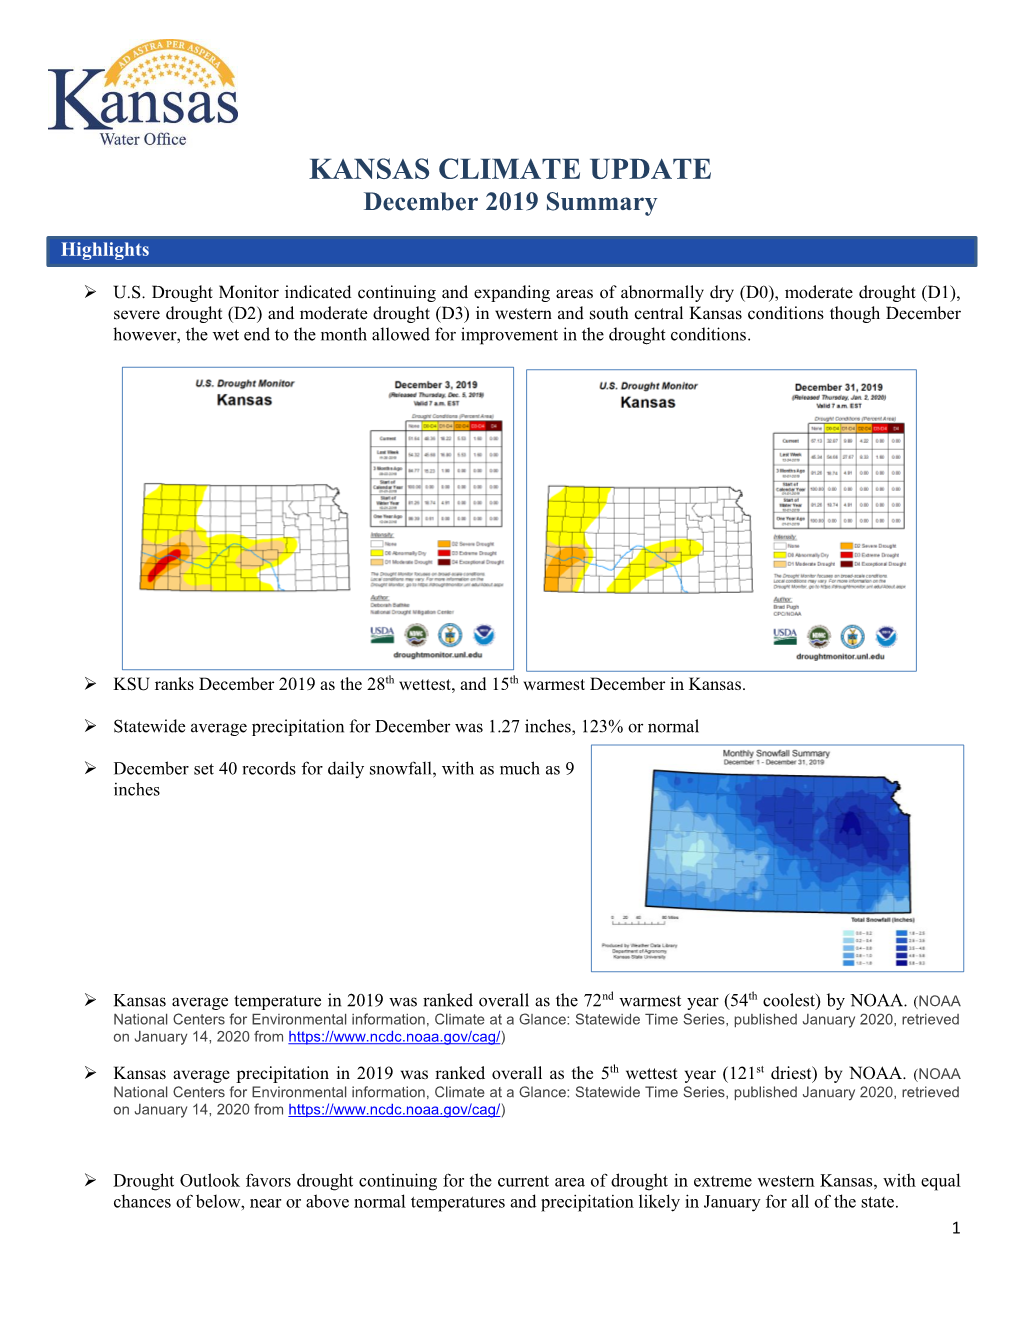 KANSAS CLIMATE UPDATE December 2019 Summary